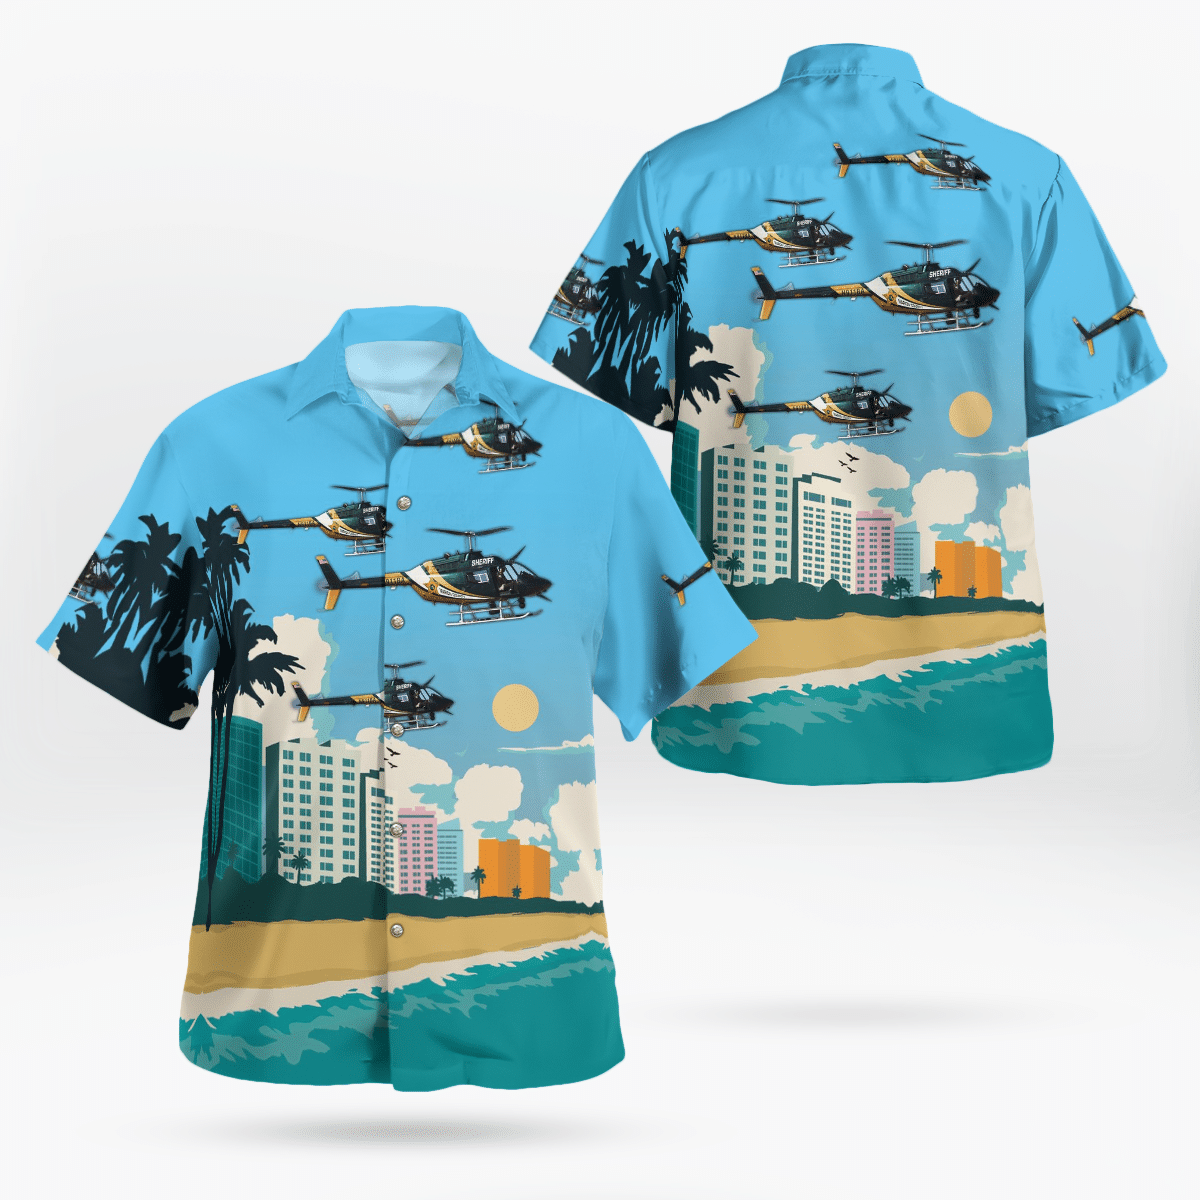 Listed below are some High-quality Aloha Shirt 109